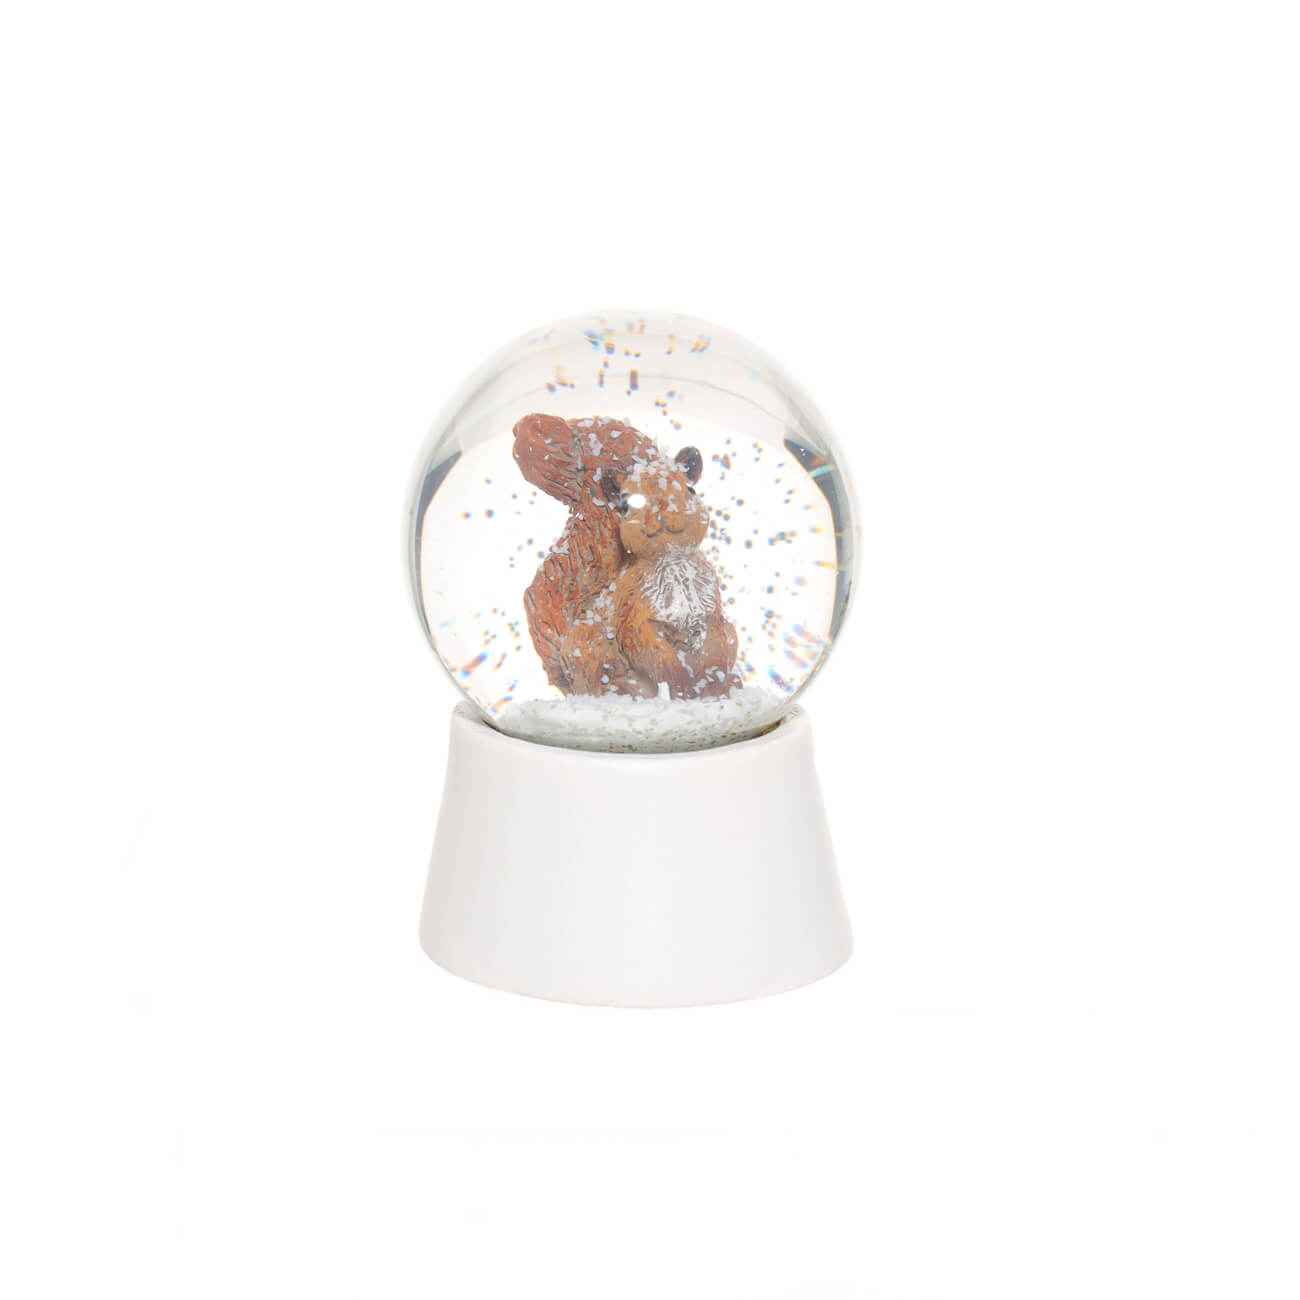 Снежный шар, 7 см, полирезин/стекло, Белка, Forest animals